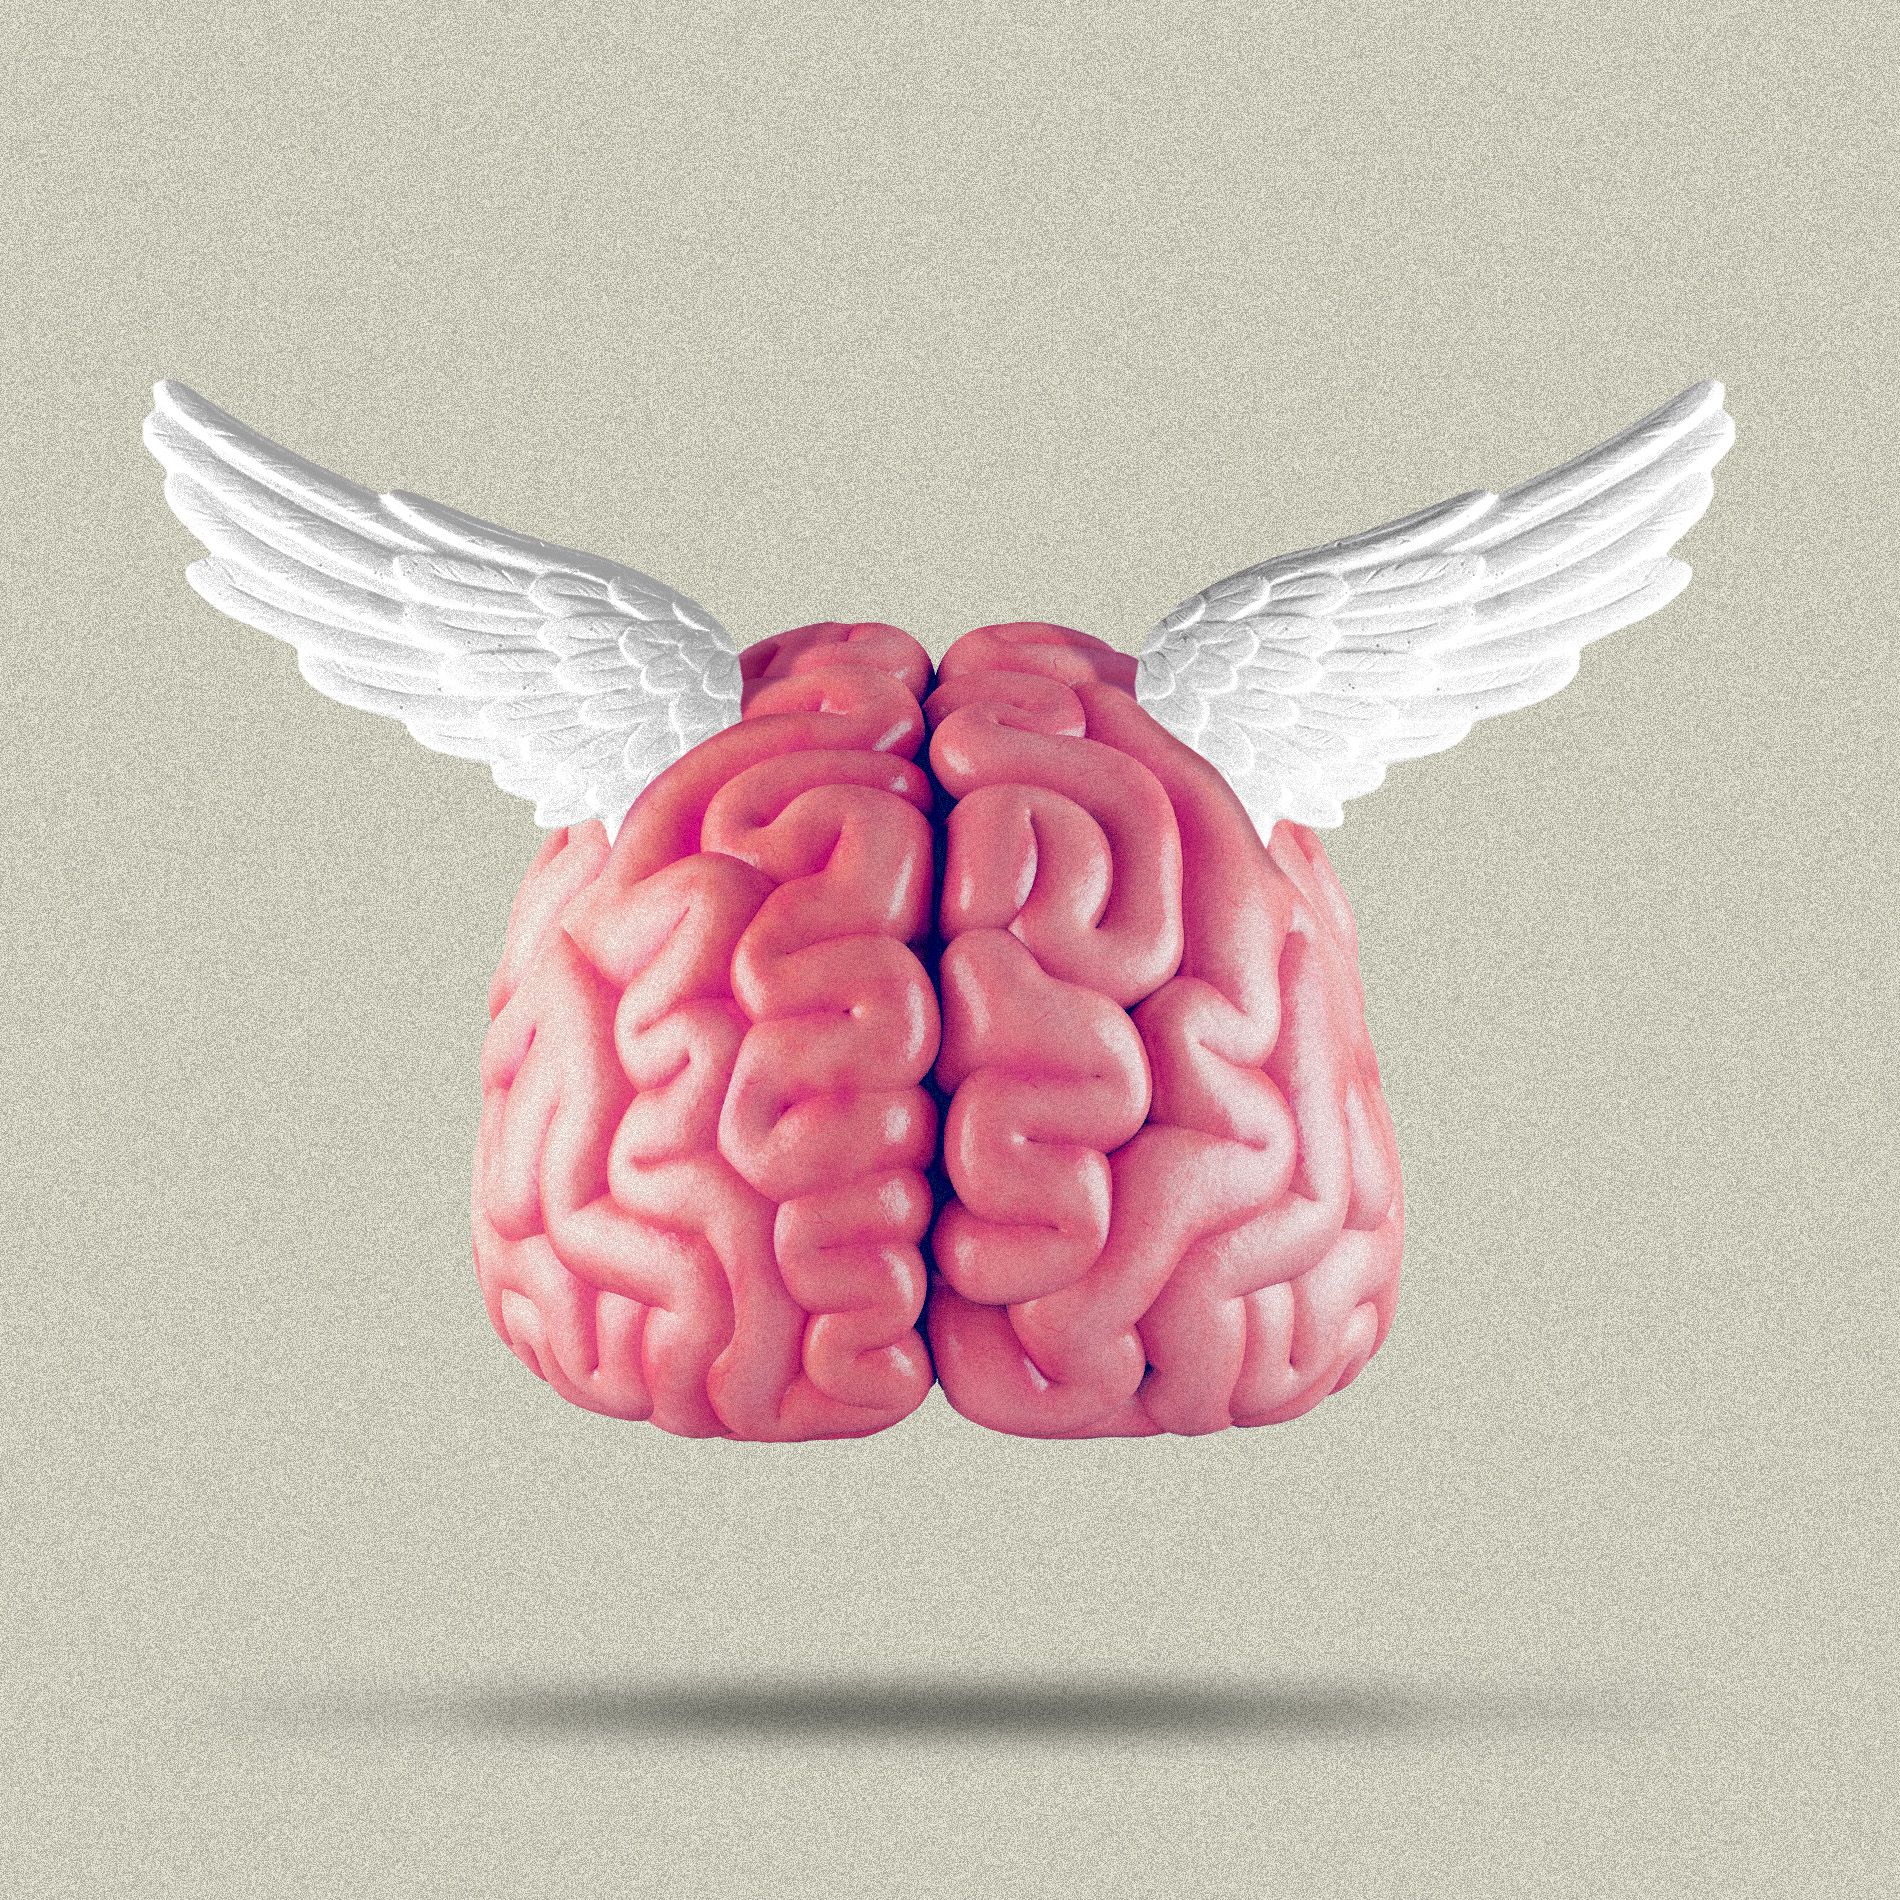 cerebro con alas ilustracion